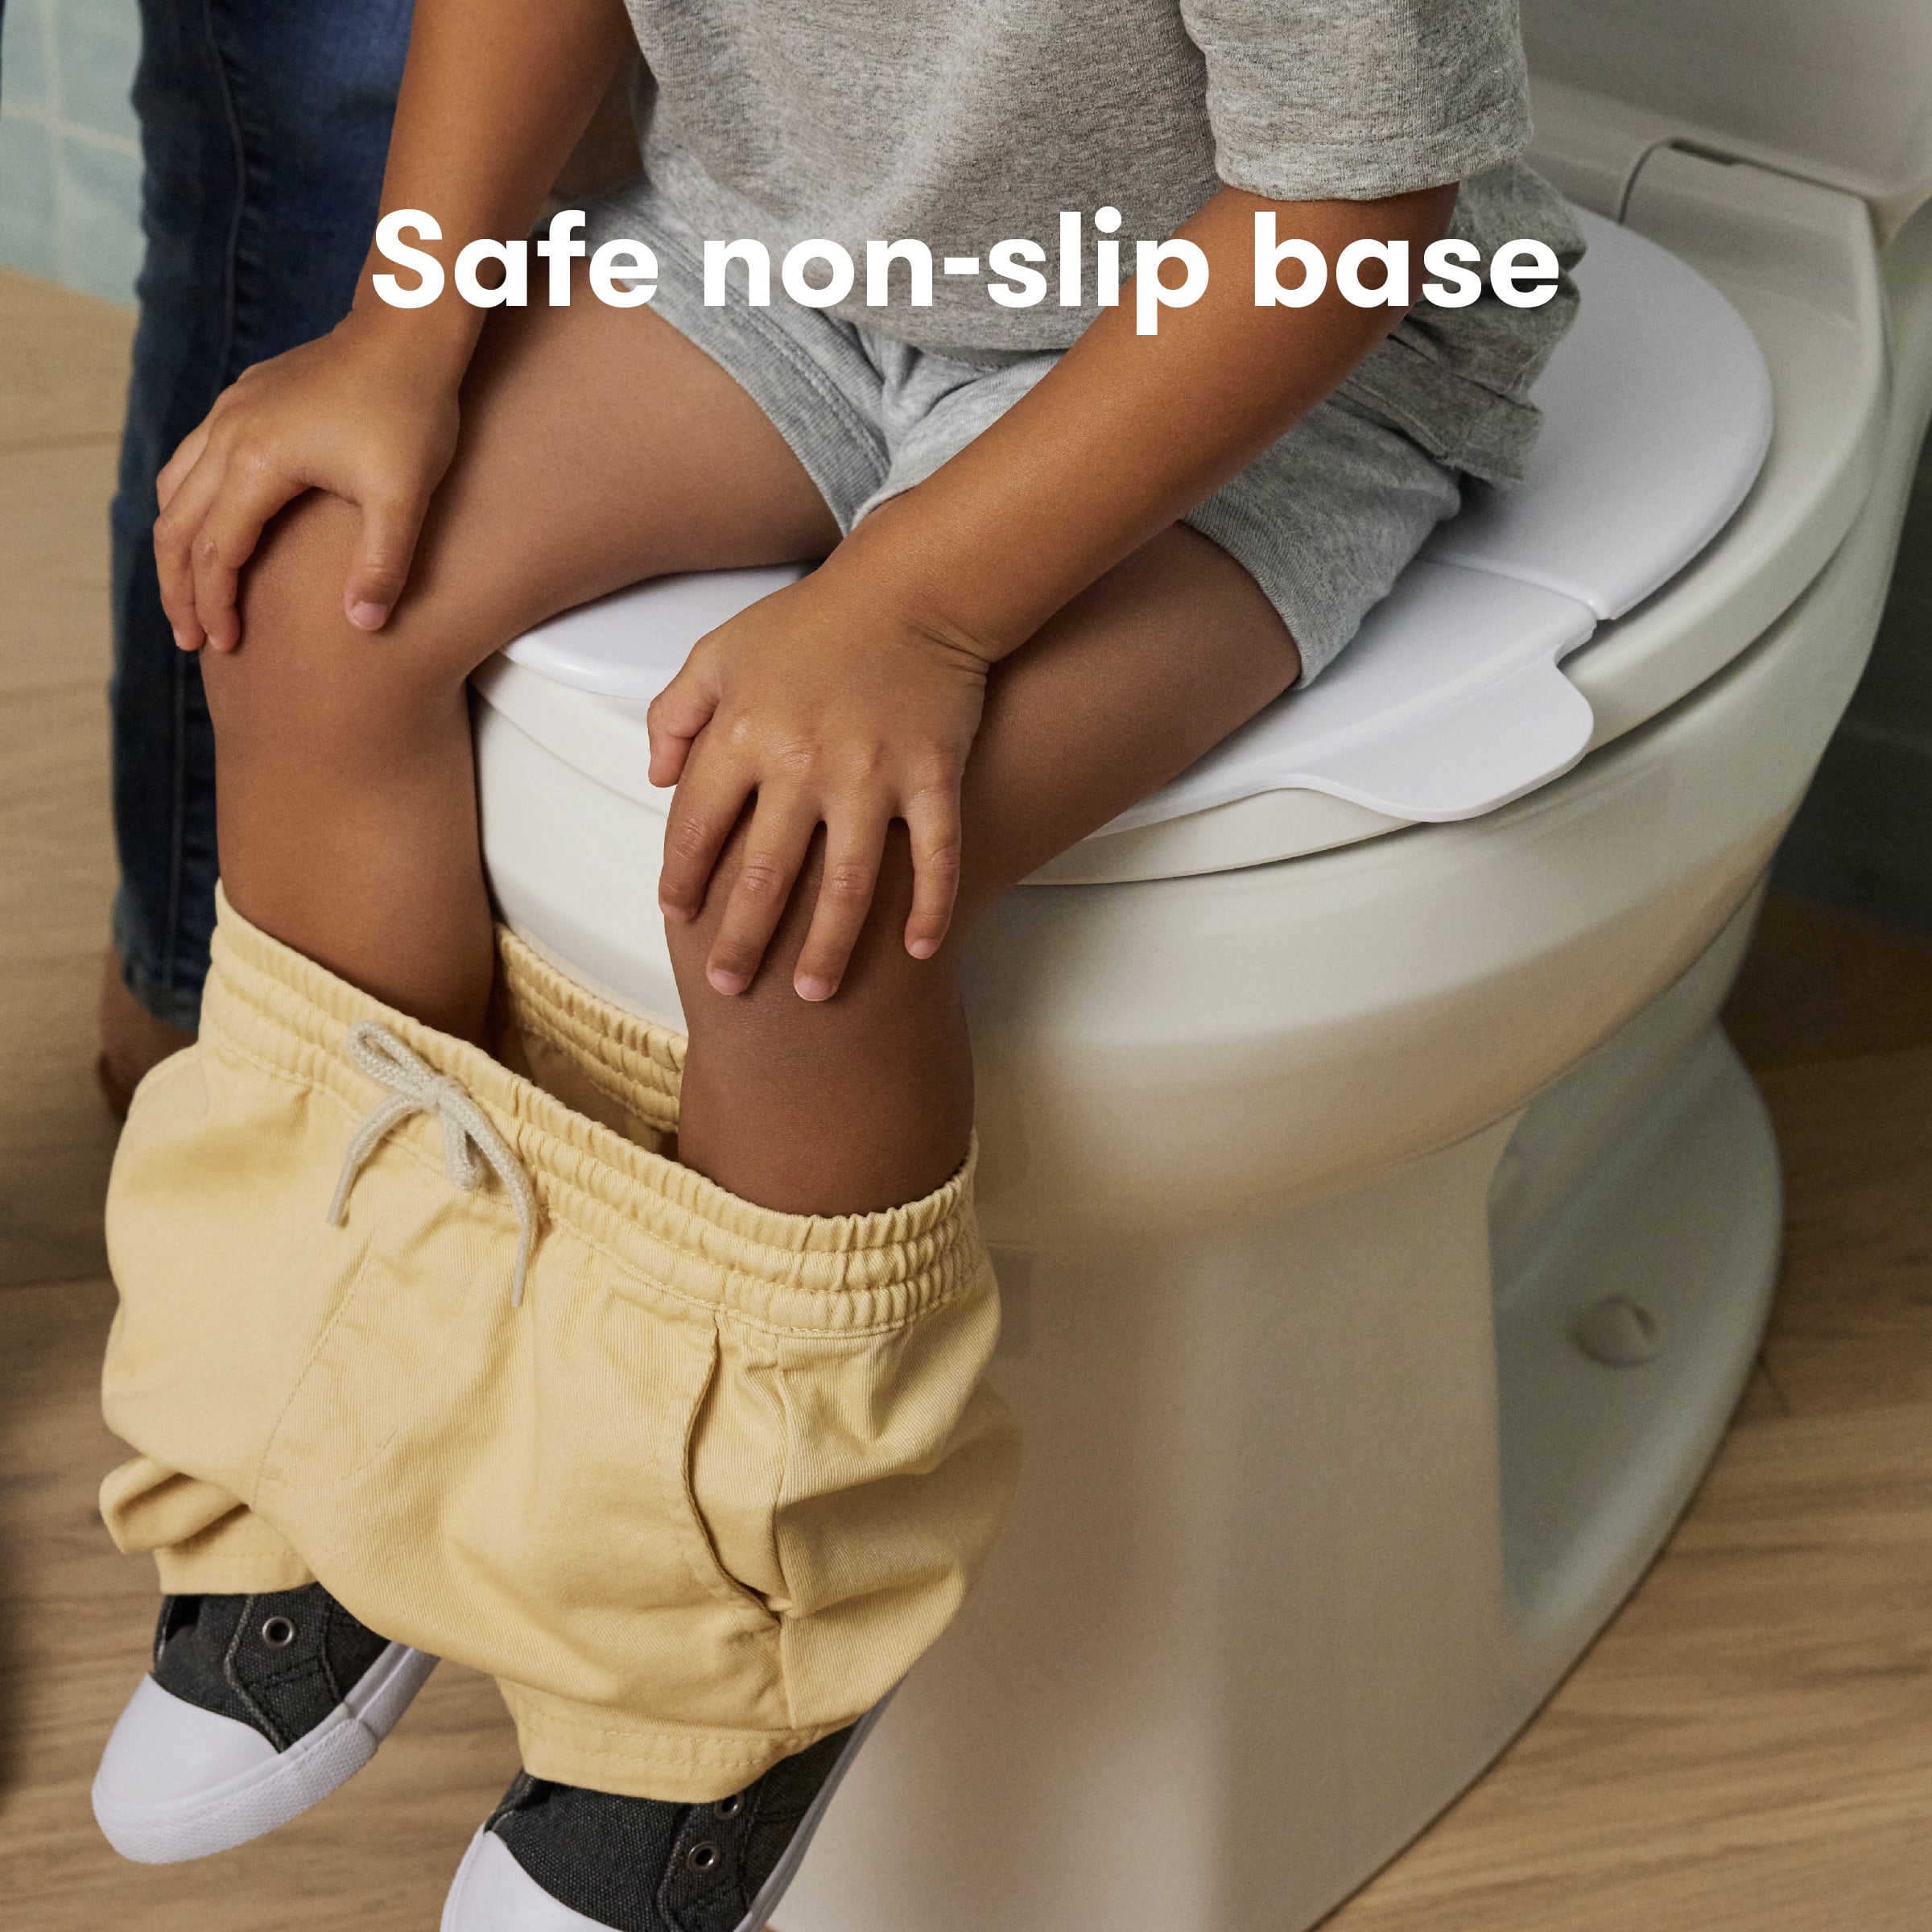 Baby Travel Potty Seat 2 In1 Portable Toilet Seat  – Grandado